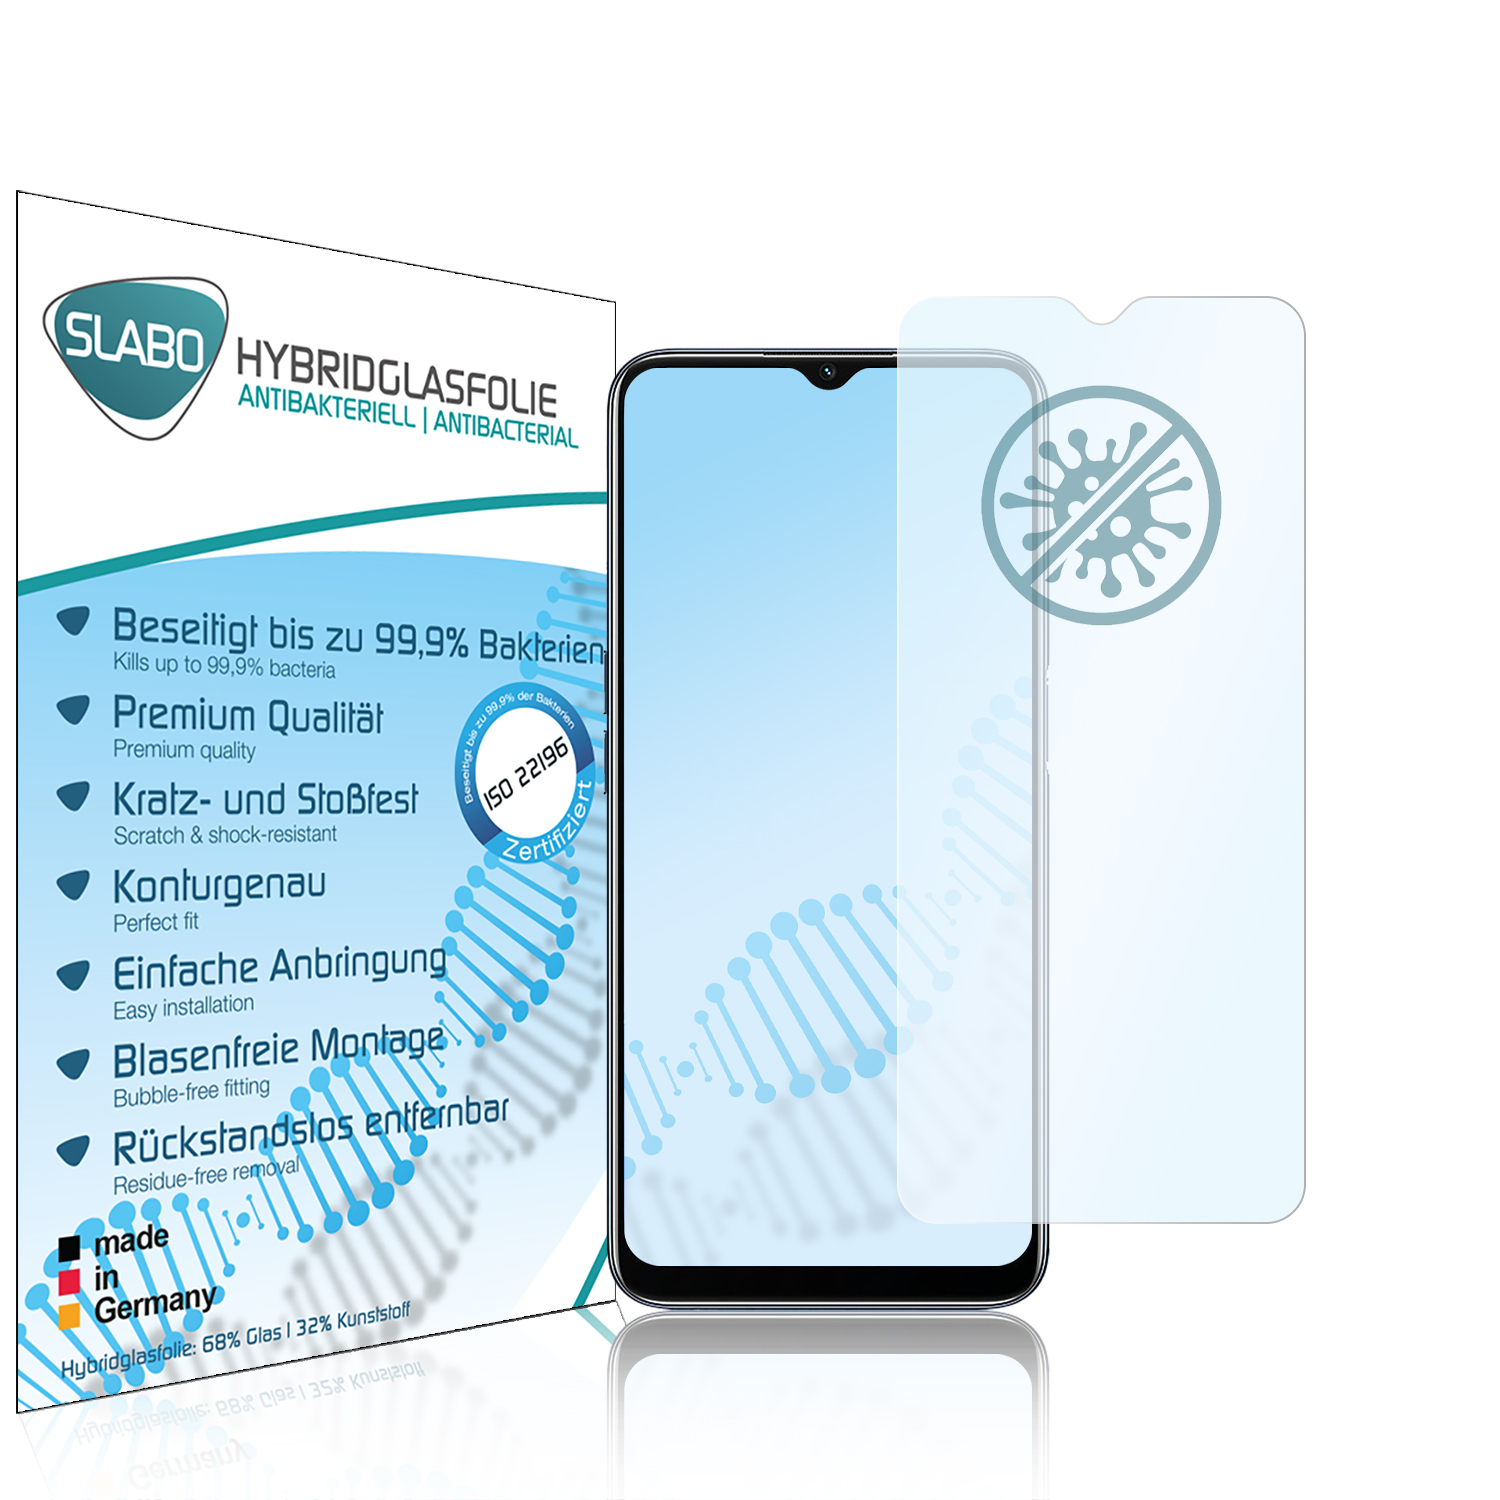 SLABO antibakteriell flexibles Hybridglas | A16s Displayschutz(für | OPPO A54s) A16